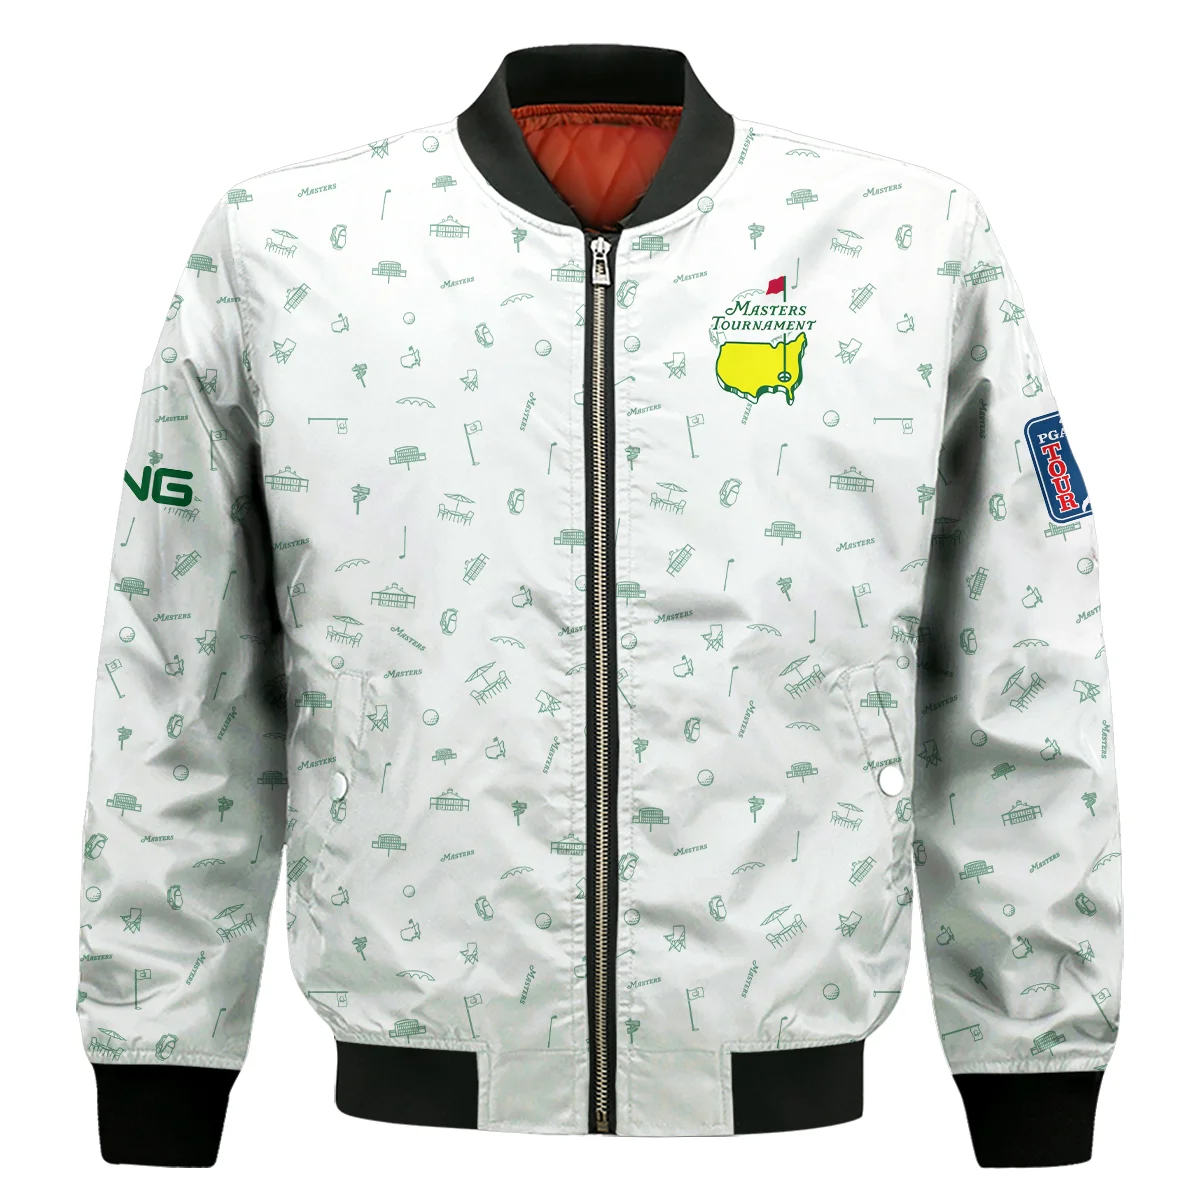 Golf Sport Masters Tournament Ping Quarter-Zip Jacket Sports Augusta Icons Pattern White Green Quarter-Zip Jacket